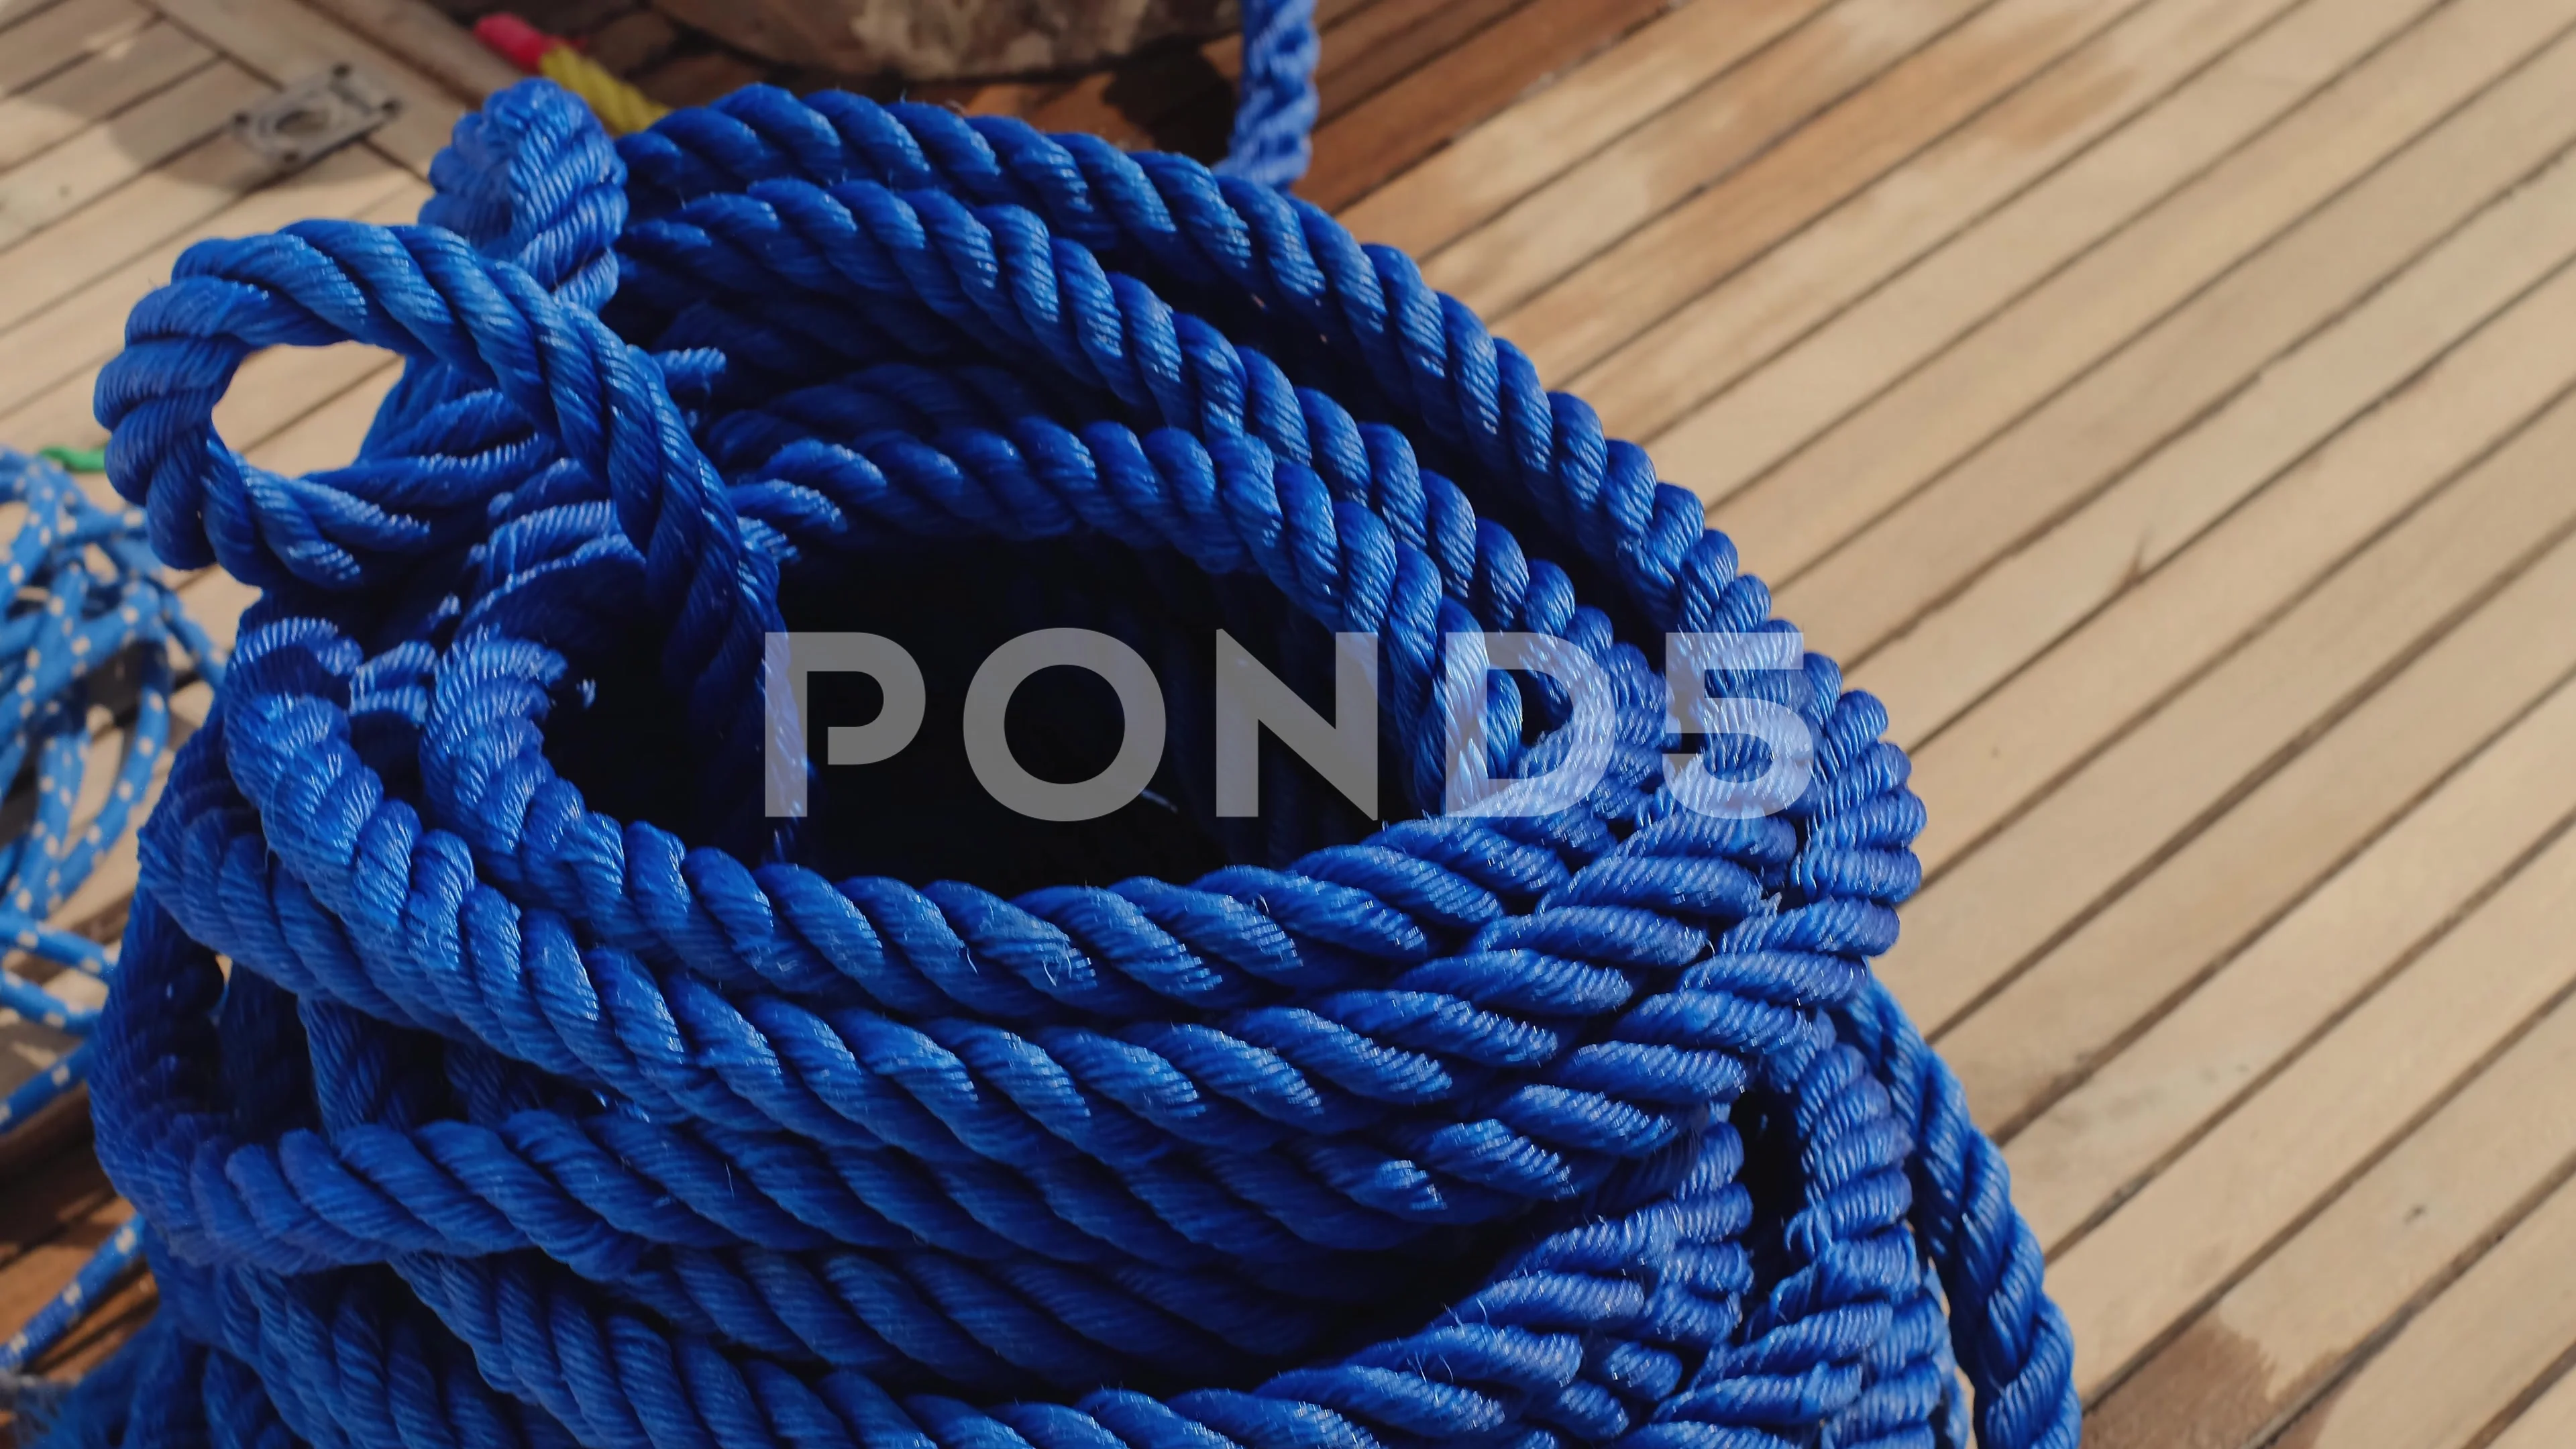 Sailing rope around a bollard - SuperStock